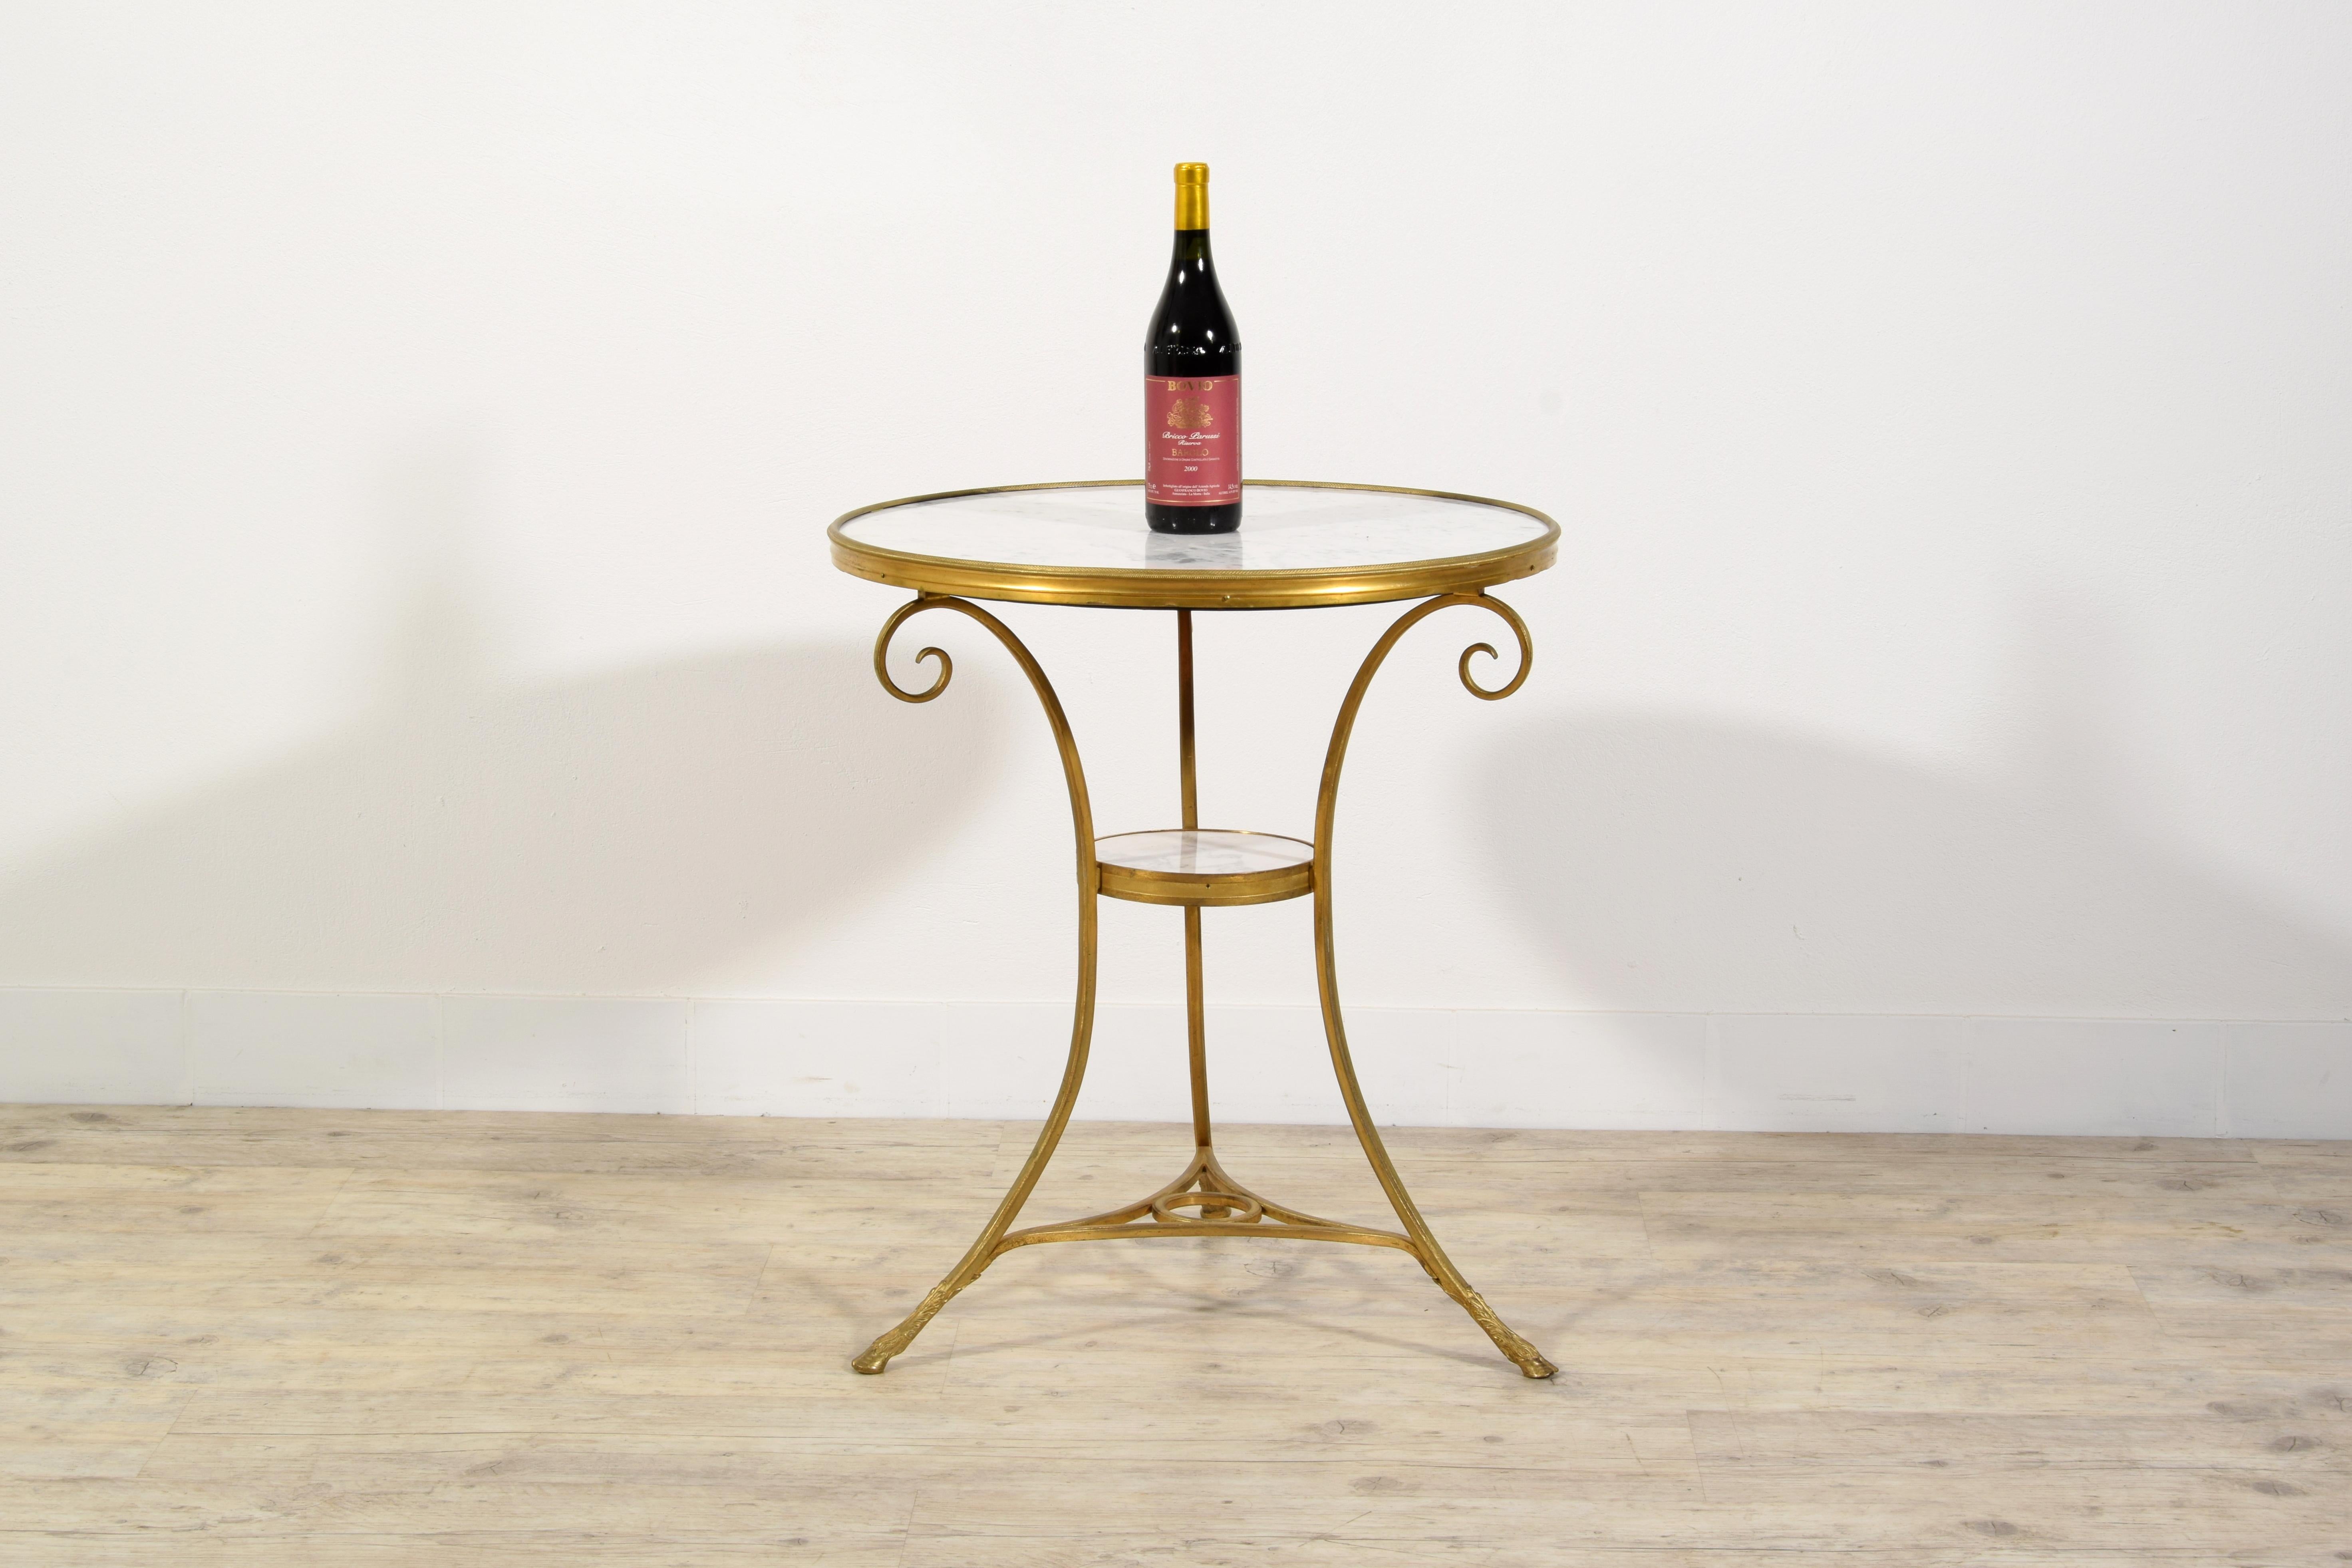 19th Century, Louis XVI Style French Gilt Bronze Tripod Coffee Table or Guéridon For Sale 4